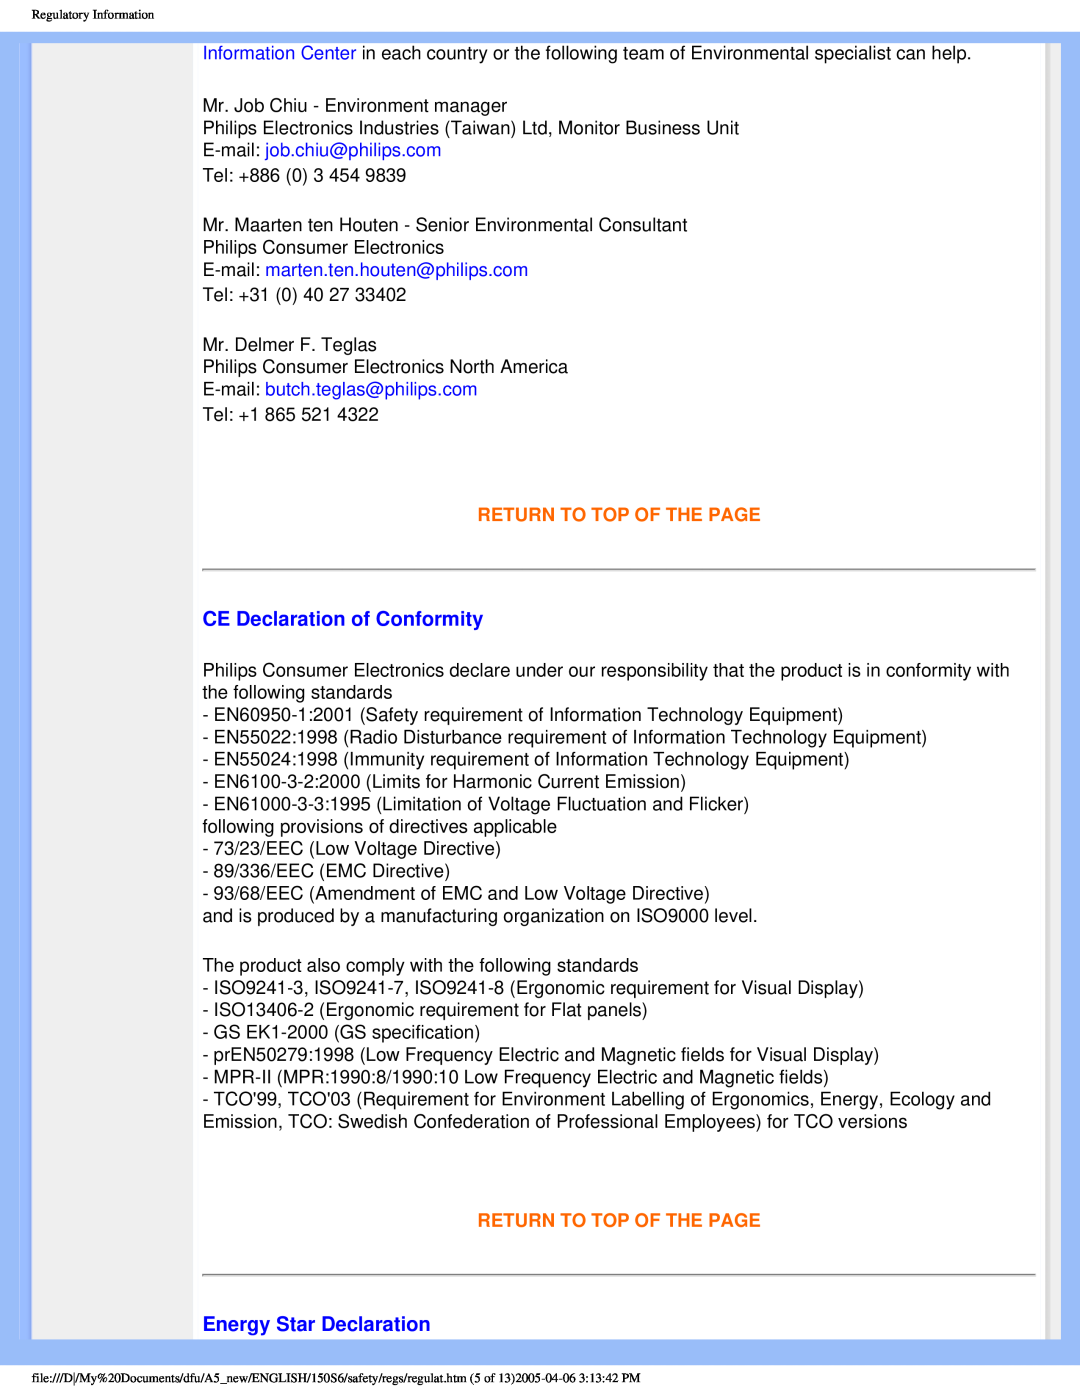 Philips 150S6 user manual CE Declaration of Conformity, Energy Star Declaration, E-mail job.chiu@philips.com 